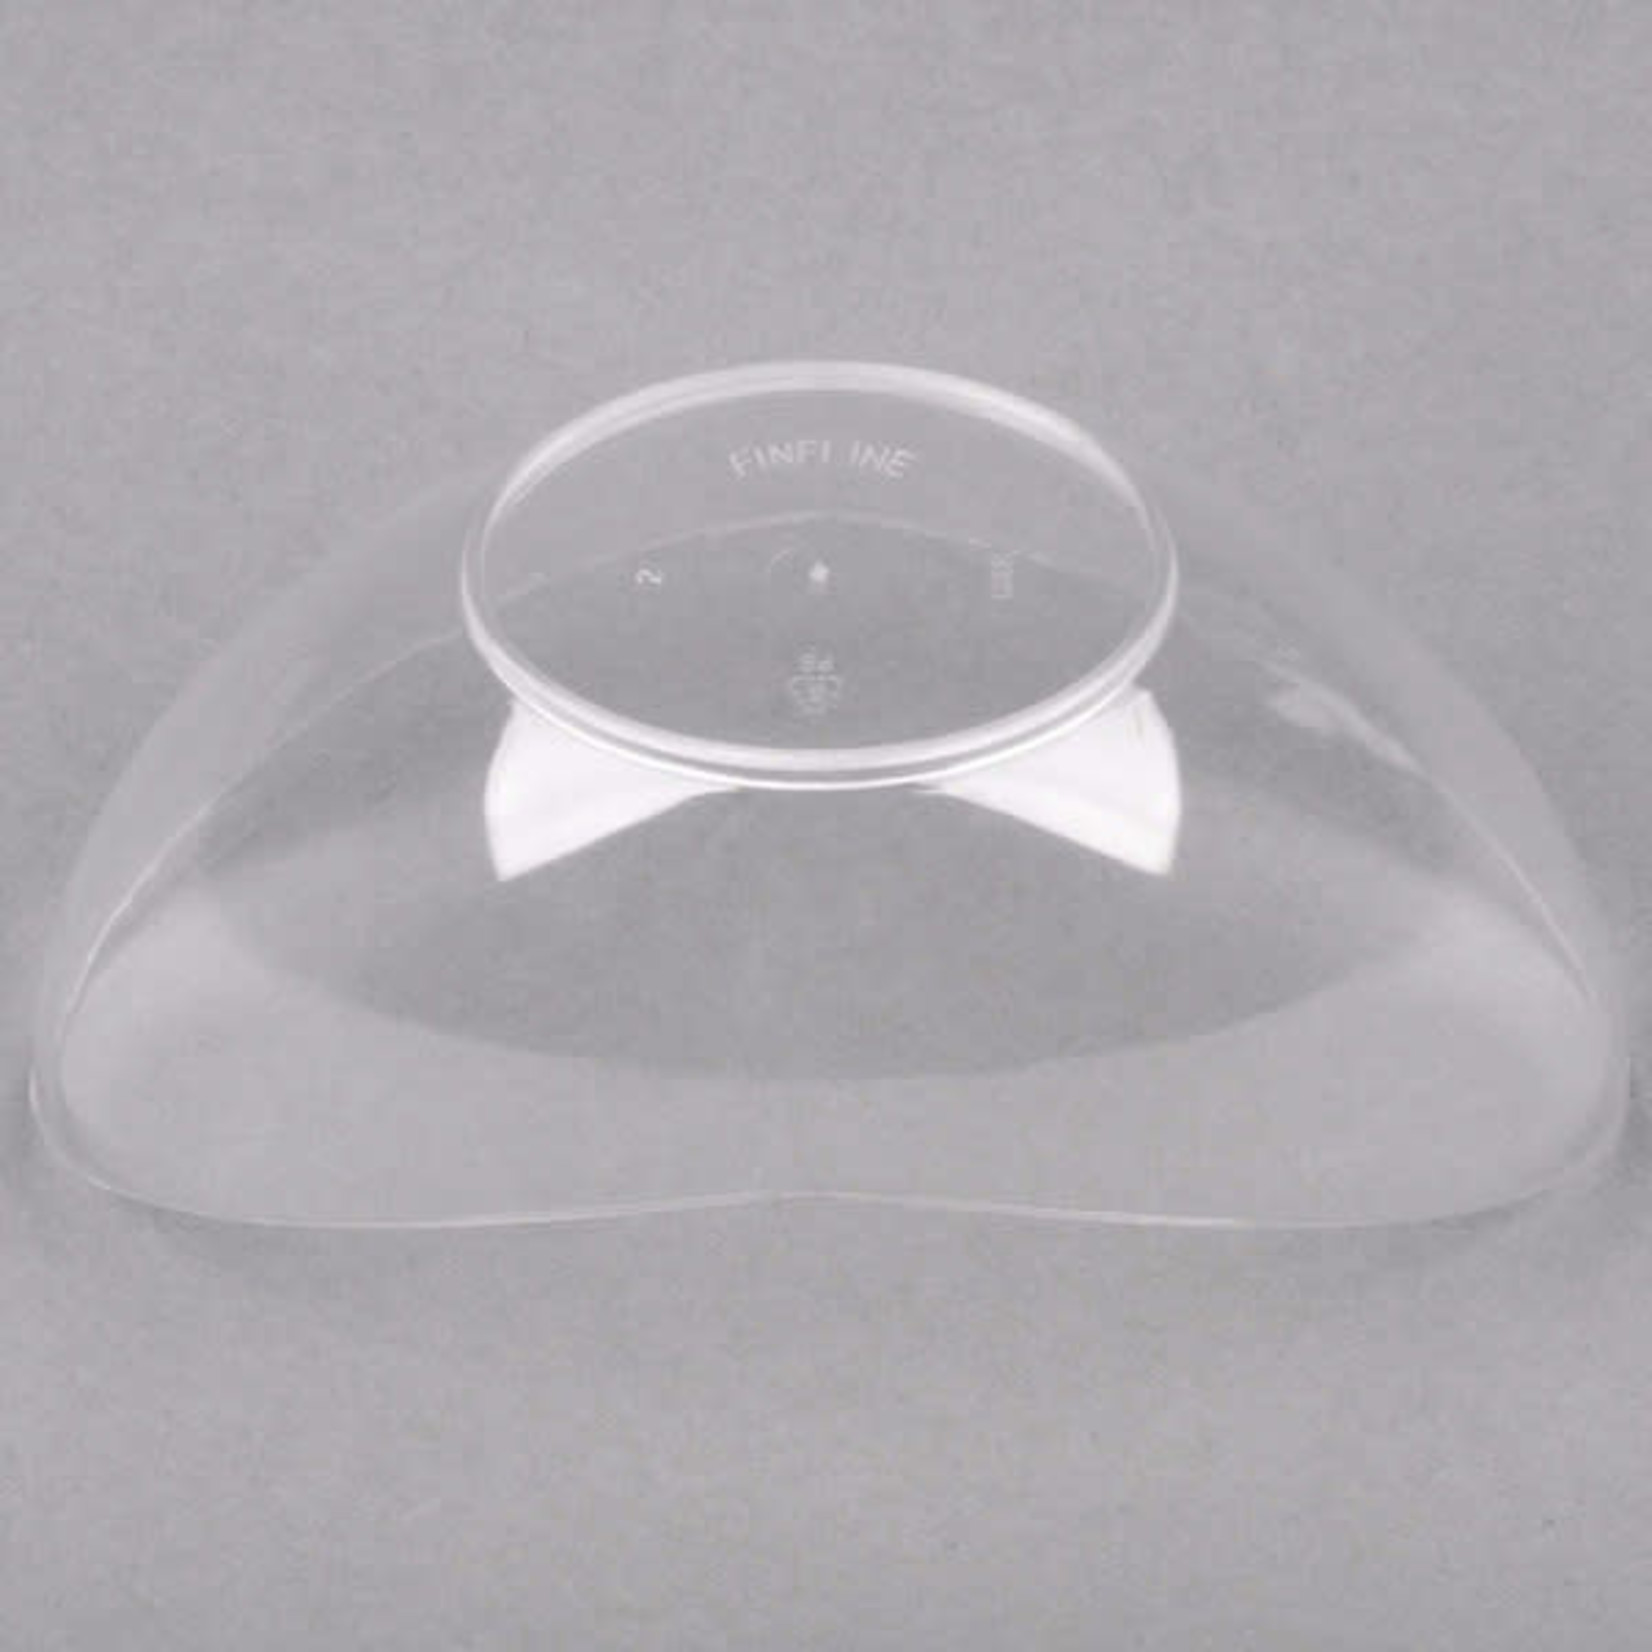 Webstaurant Clear Plastic Tiny Tureen Bowl - 5” x 2.6” - 12/pack